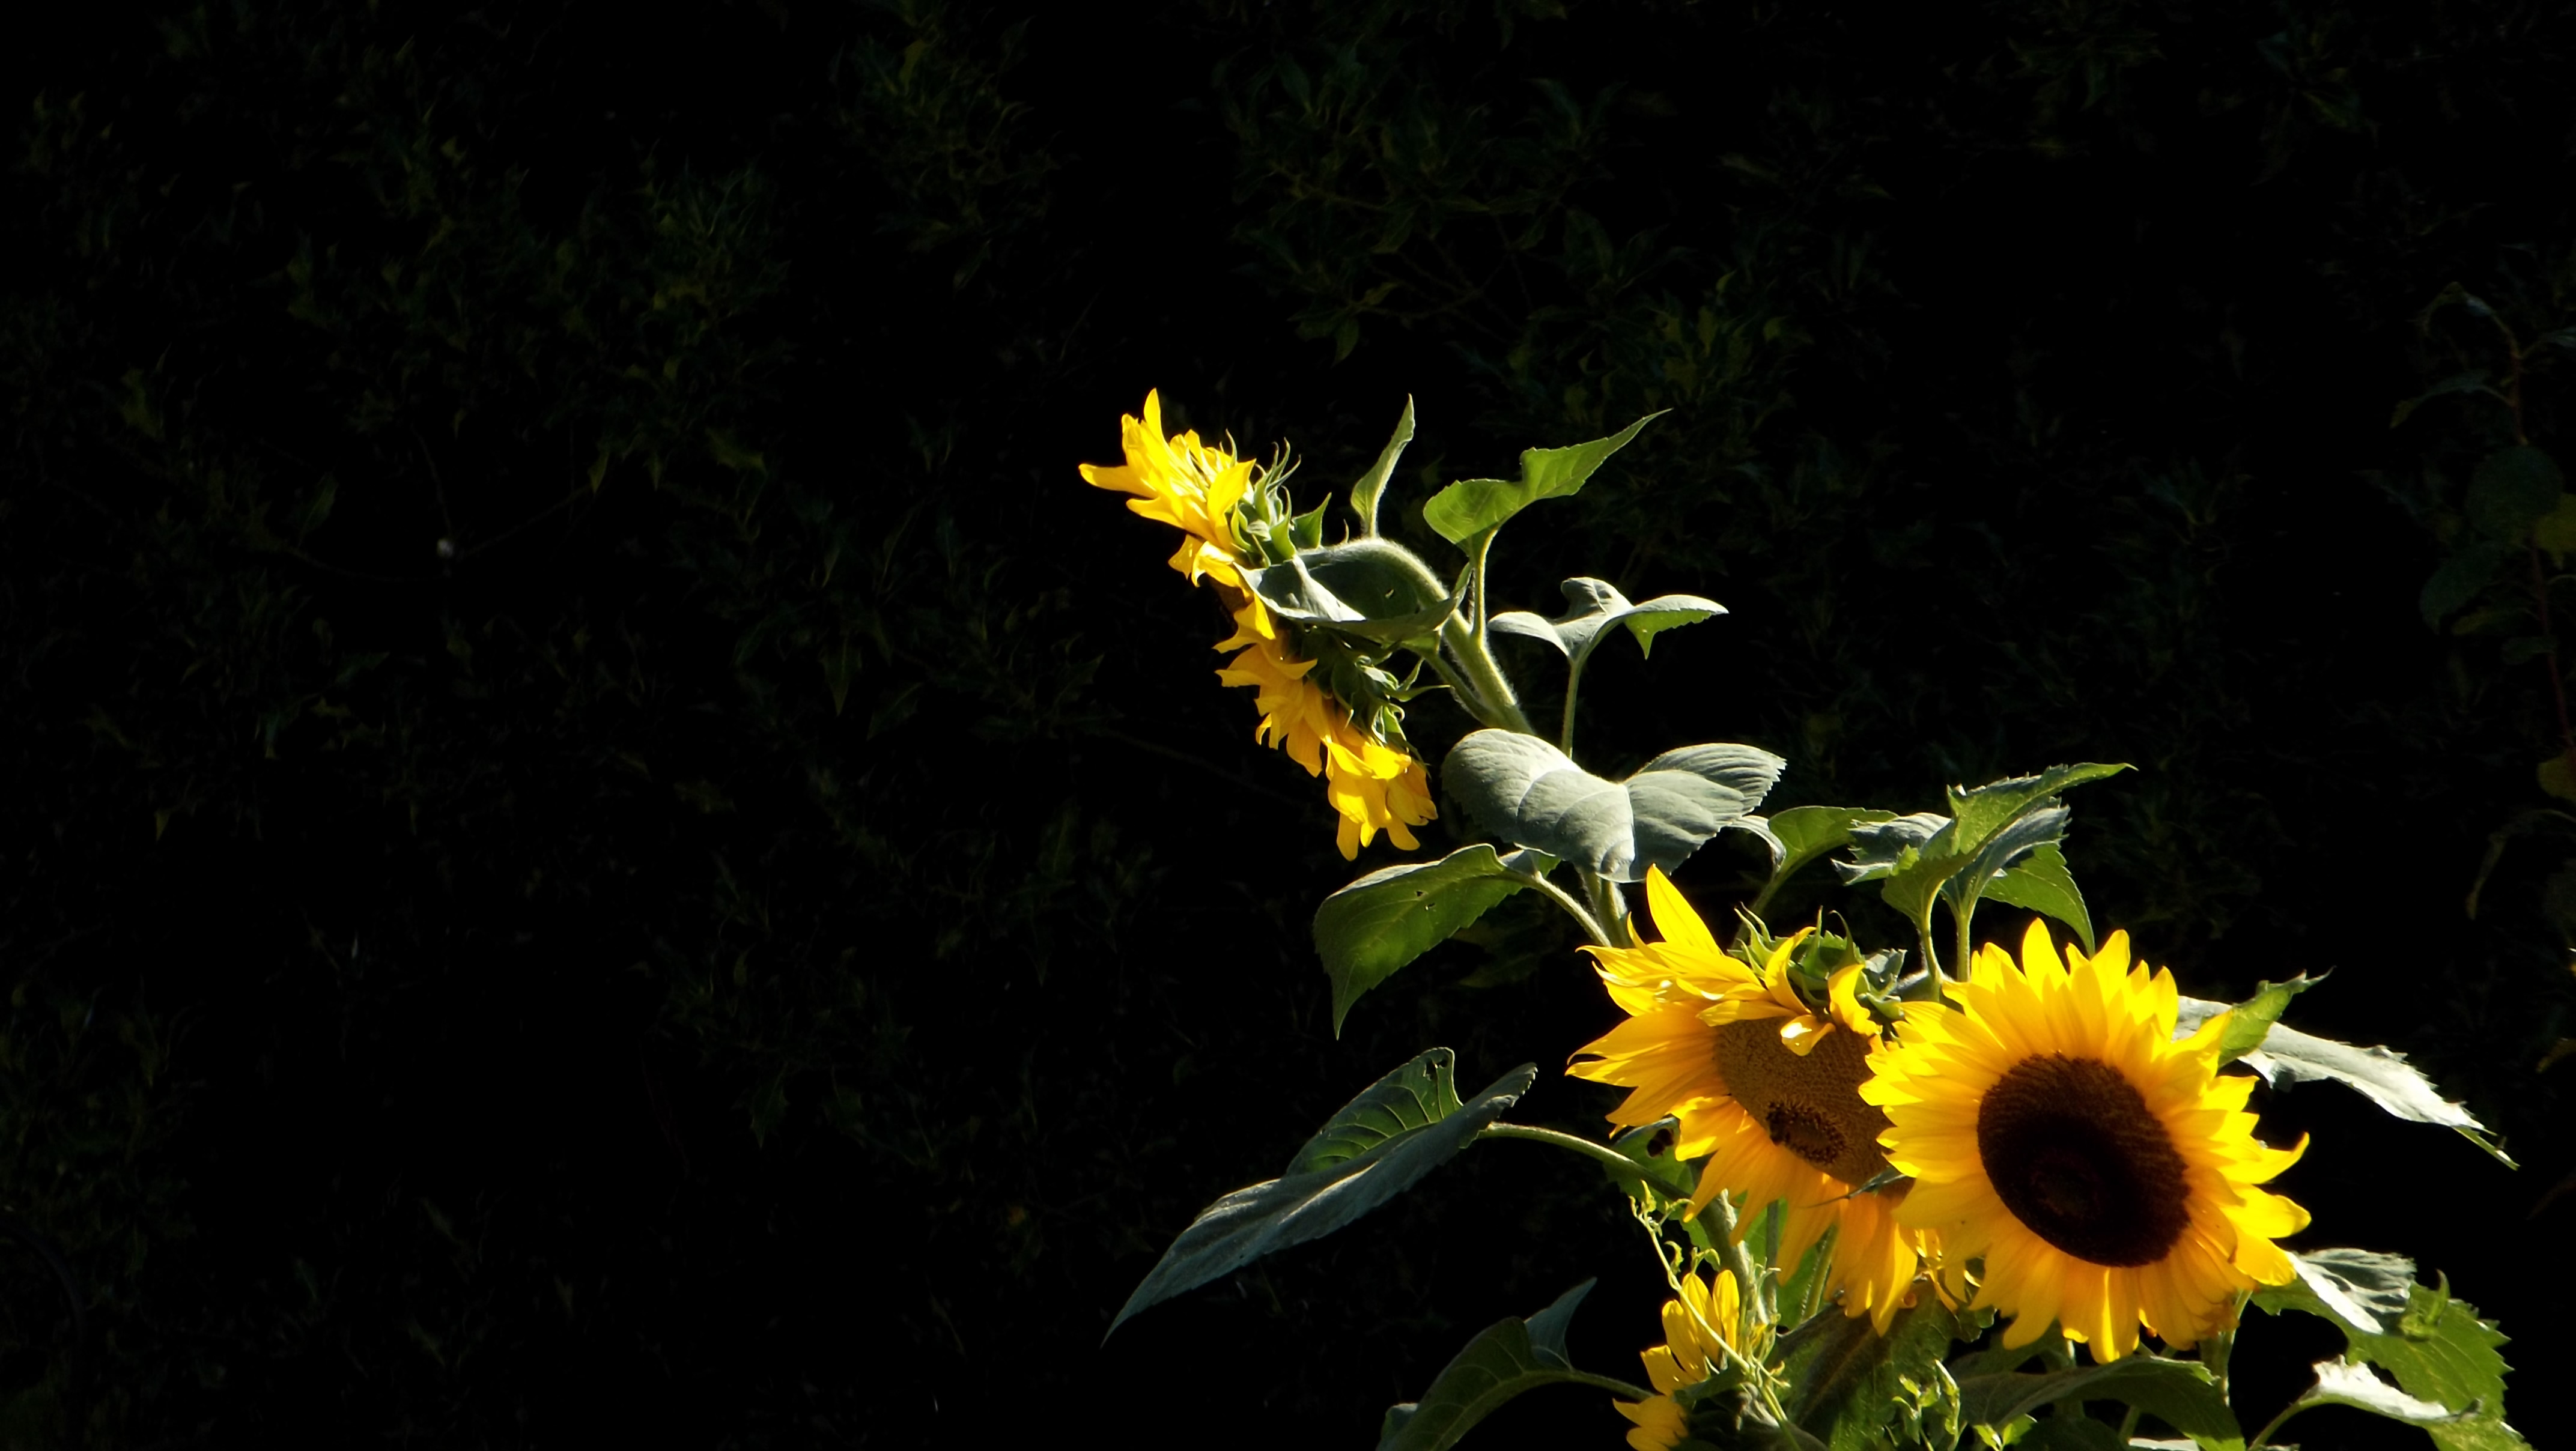 Sunflower 4k Ultra HD Wallpaper | Background Image ...